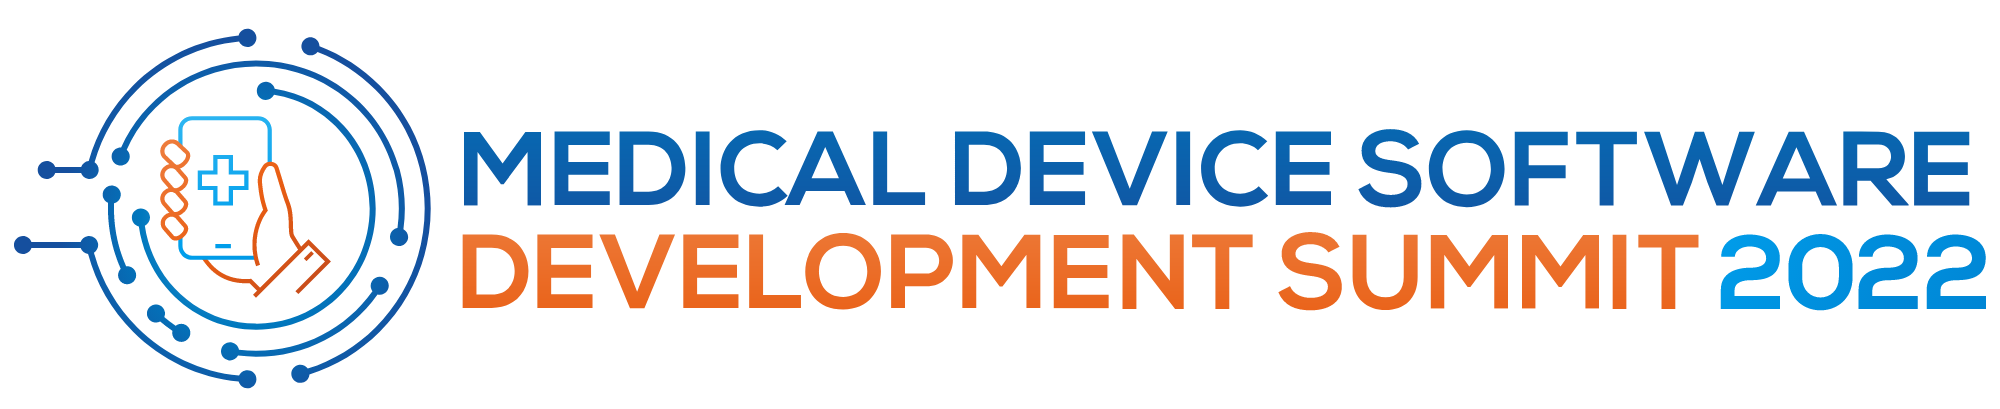 Med Device Software Development Summit